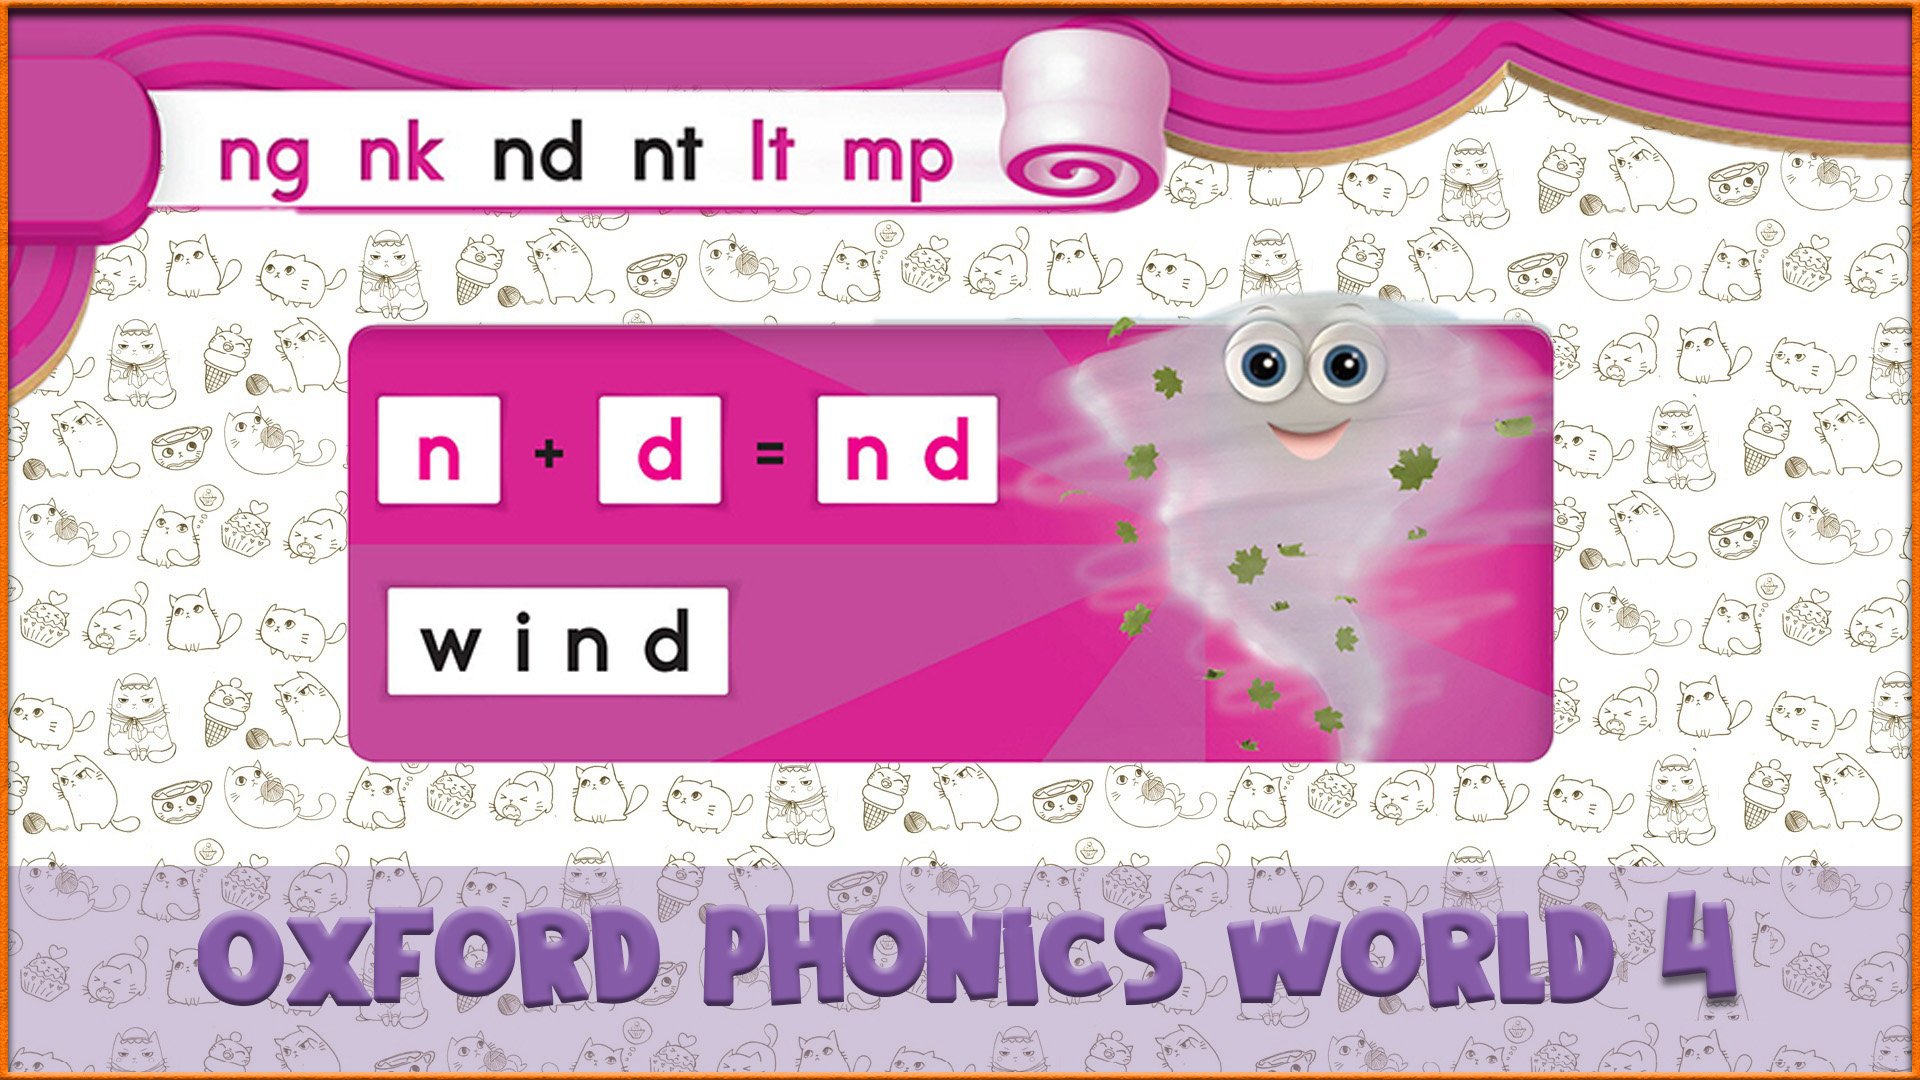 | nd | Oxford Phonics World 4 - Consonant Blends. #36